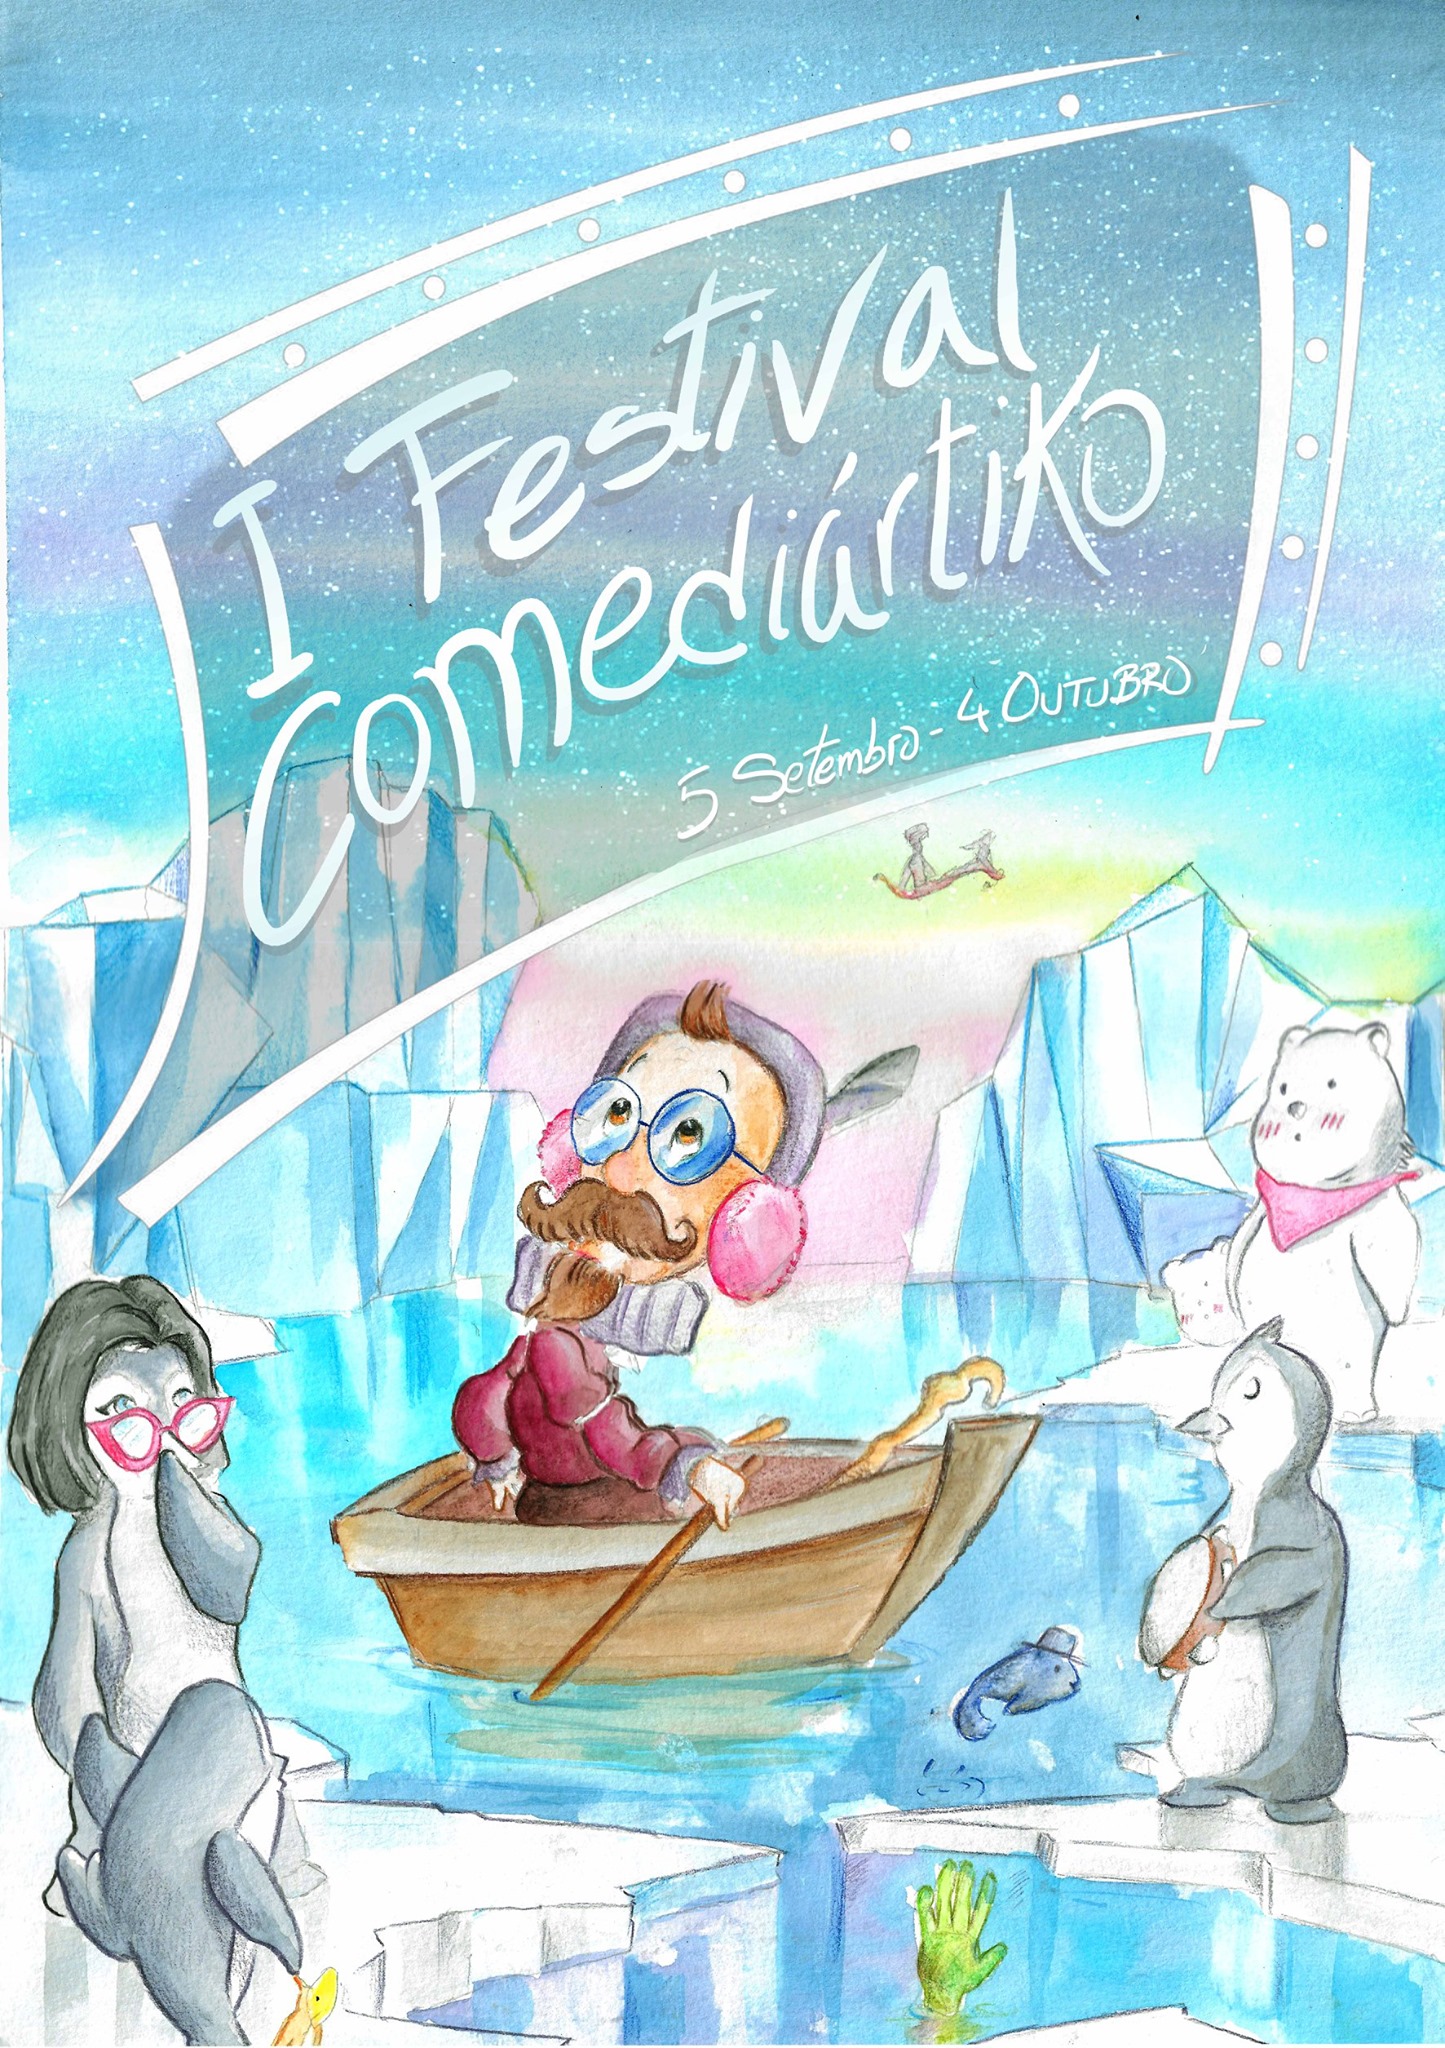 Cartel I Festival Comediártiko